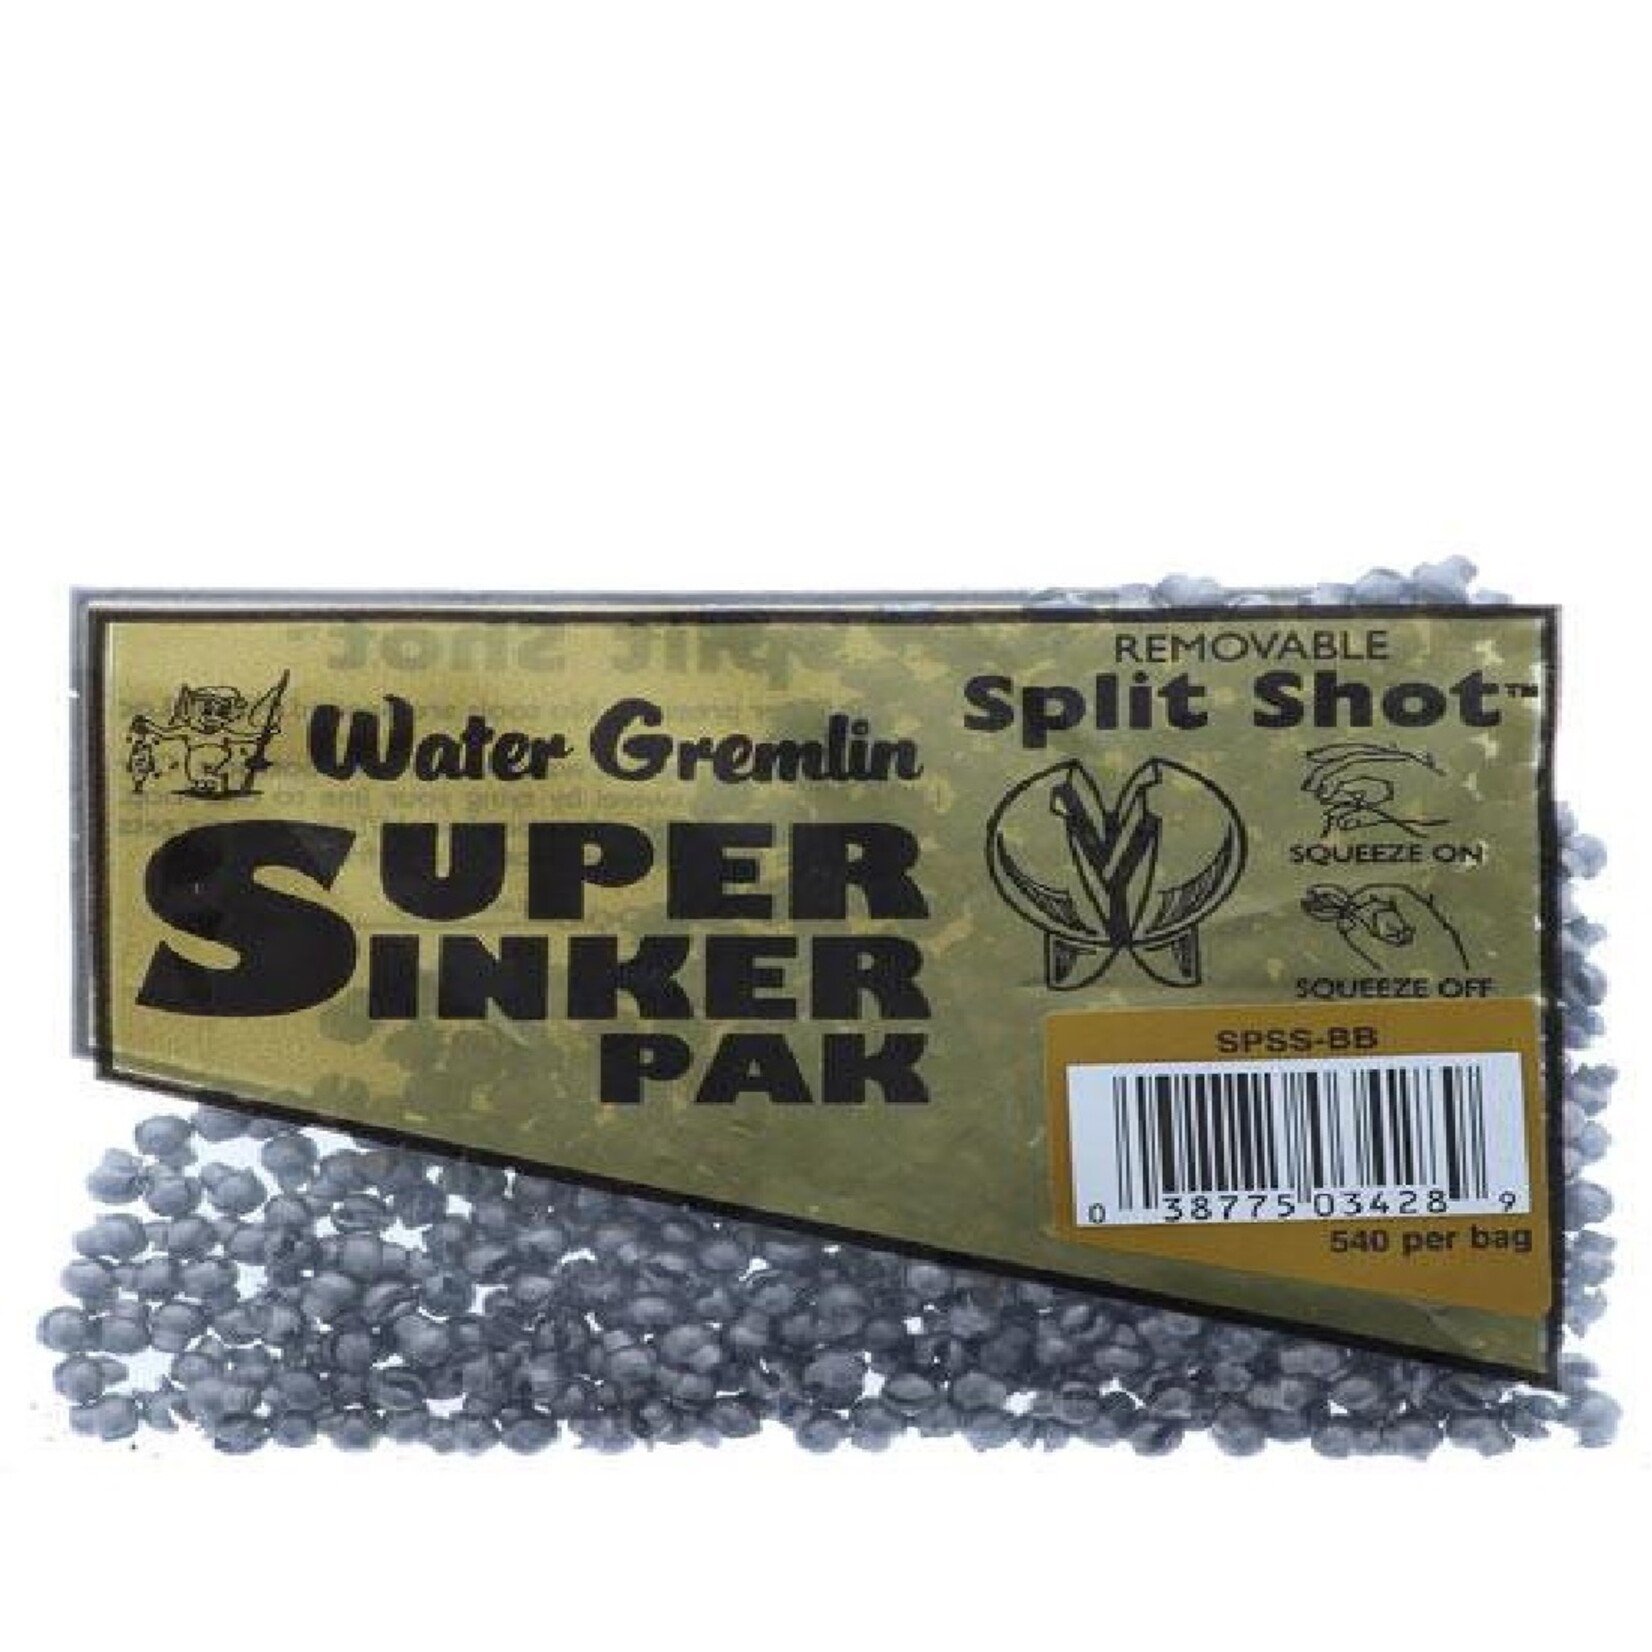 WATER GREMLIN CO. WATER GREMLIN SUPER SINKER PAK